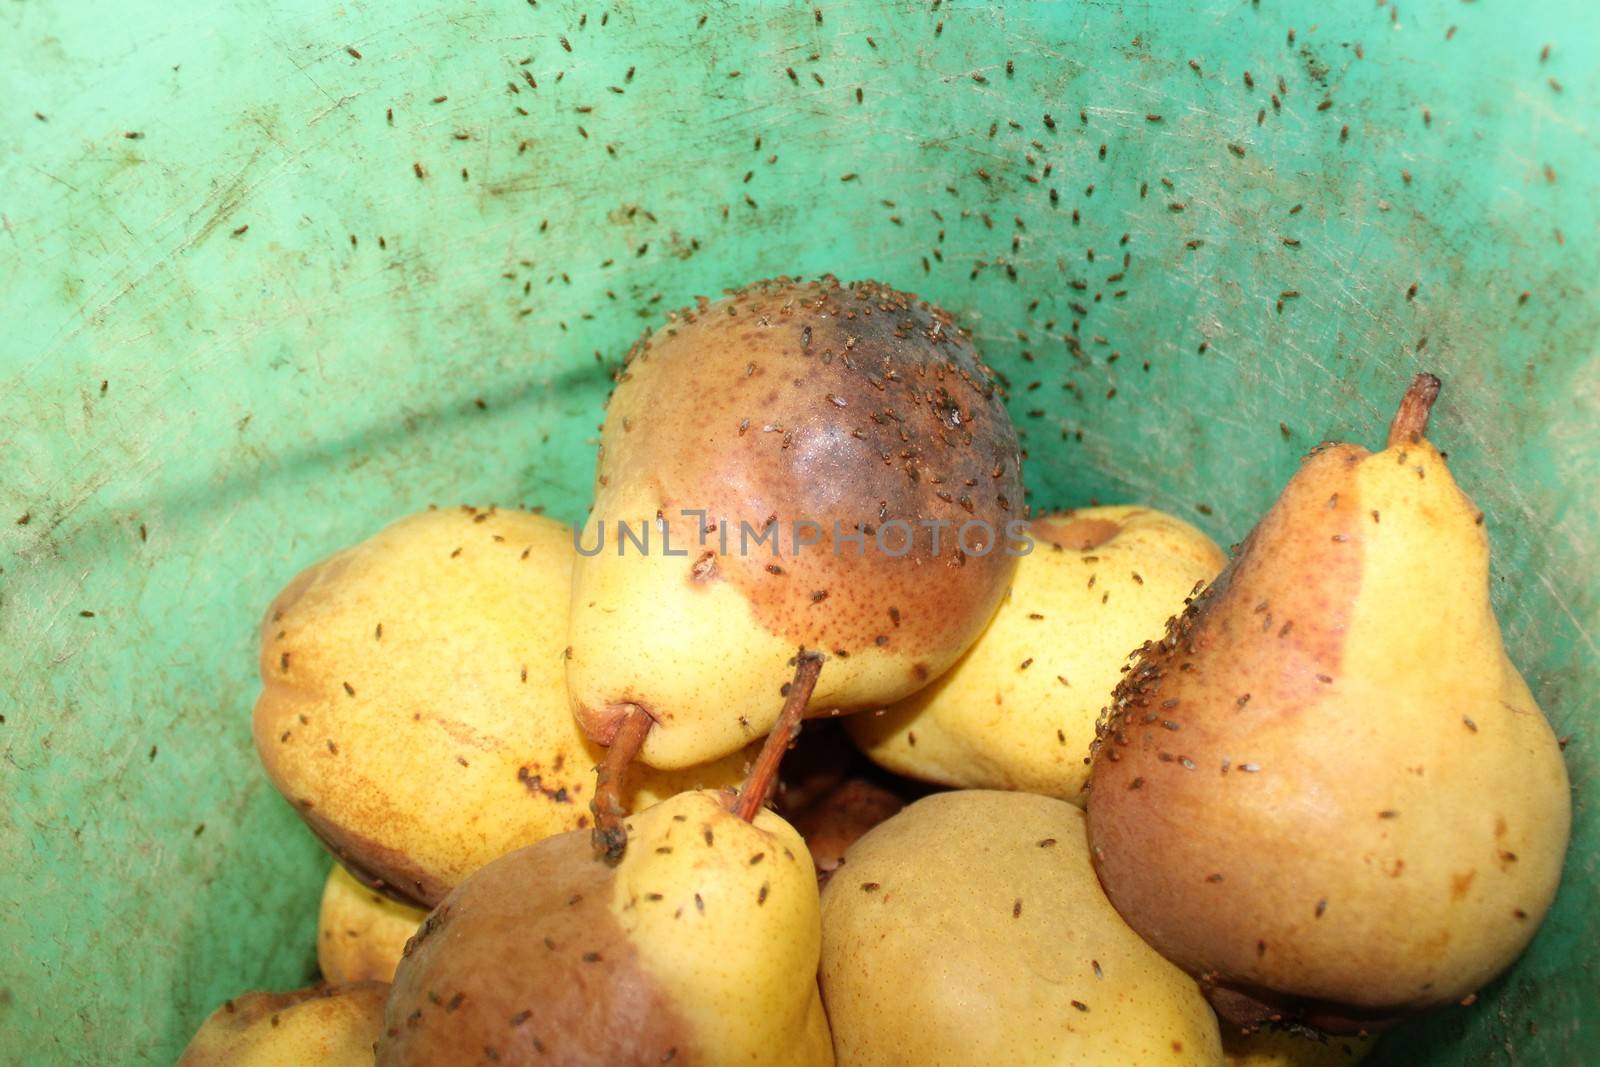 fruit flies on pears by martina_unbehauen